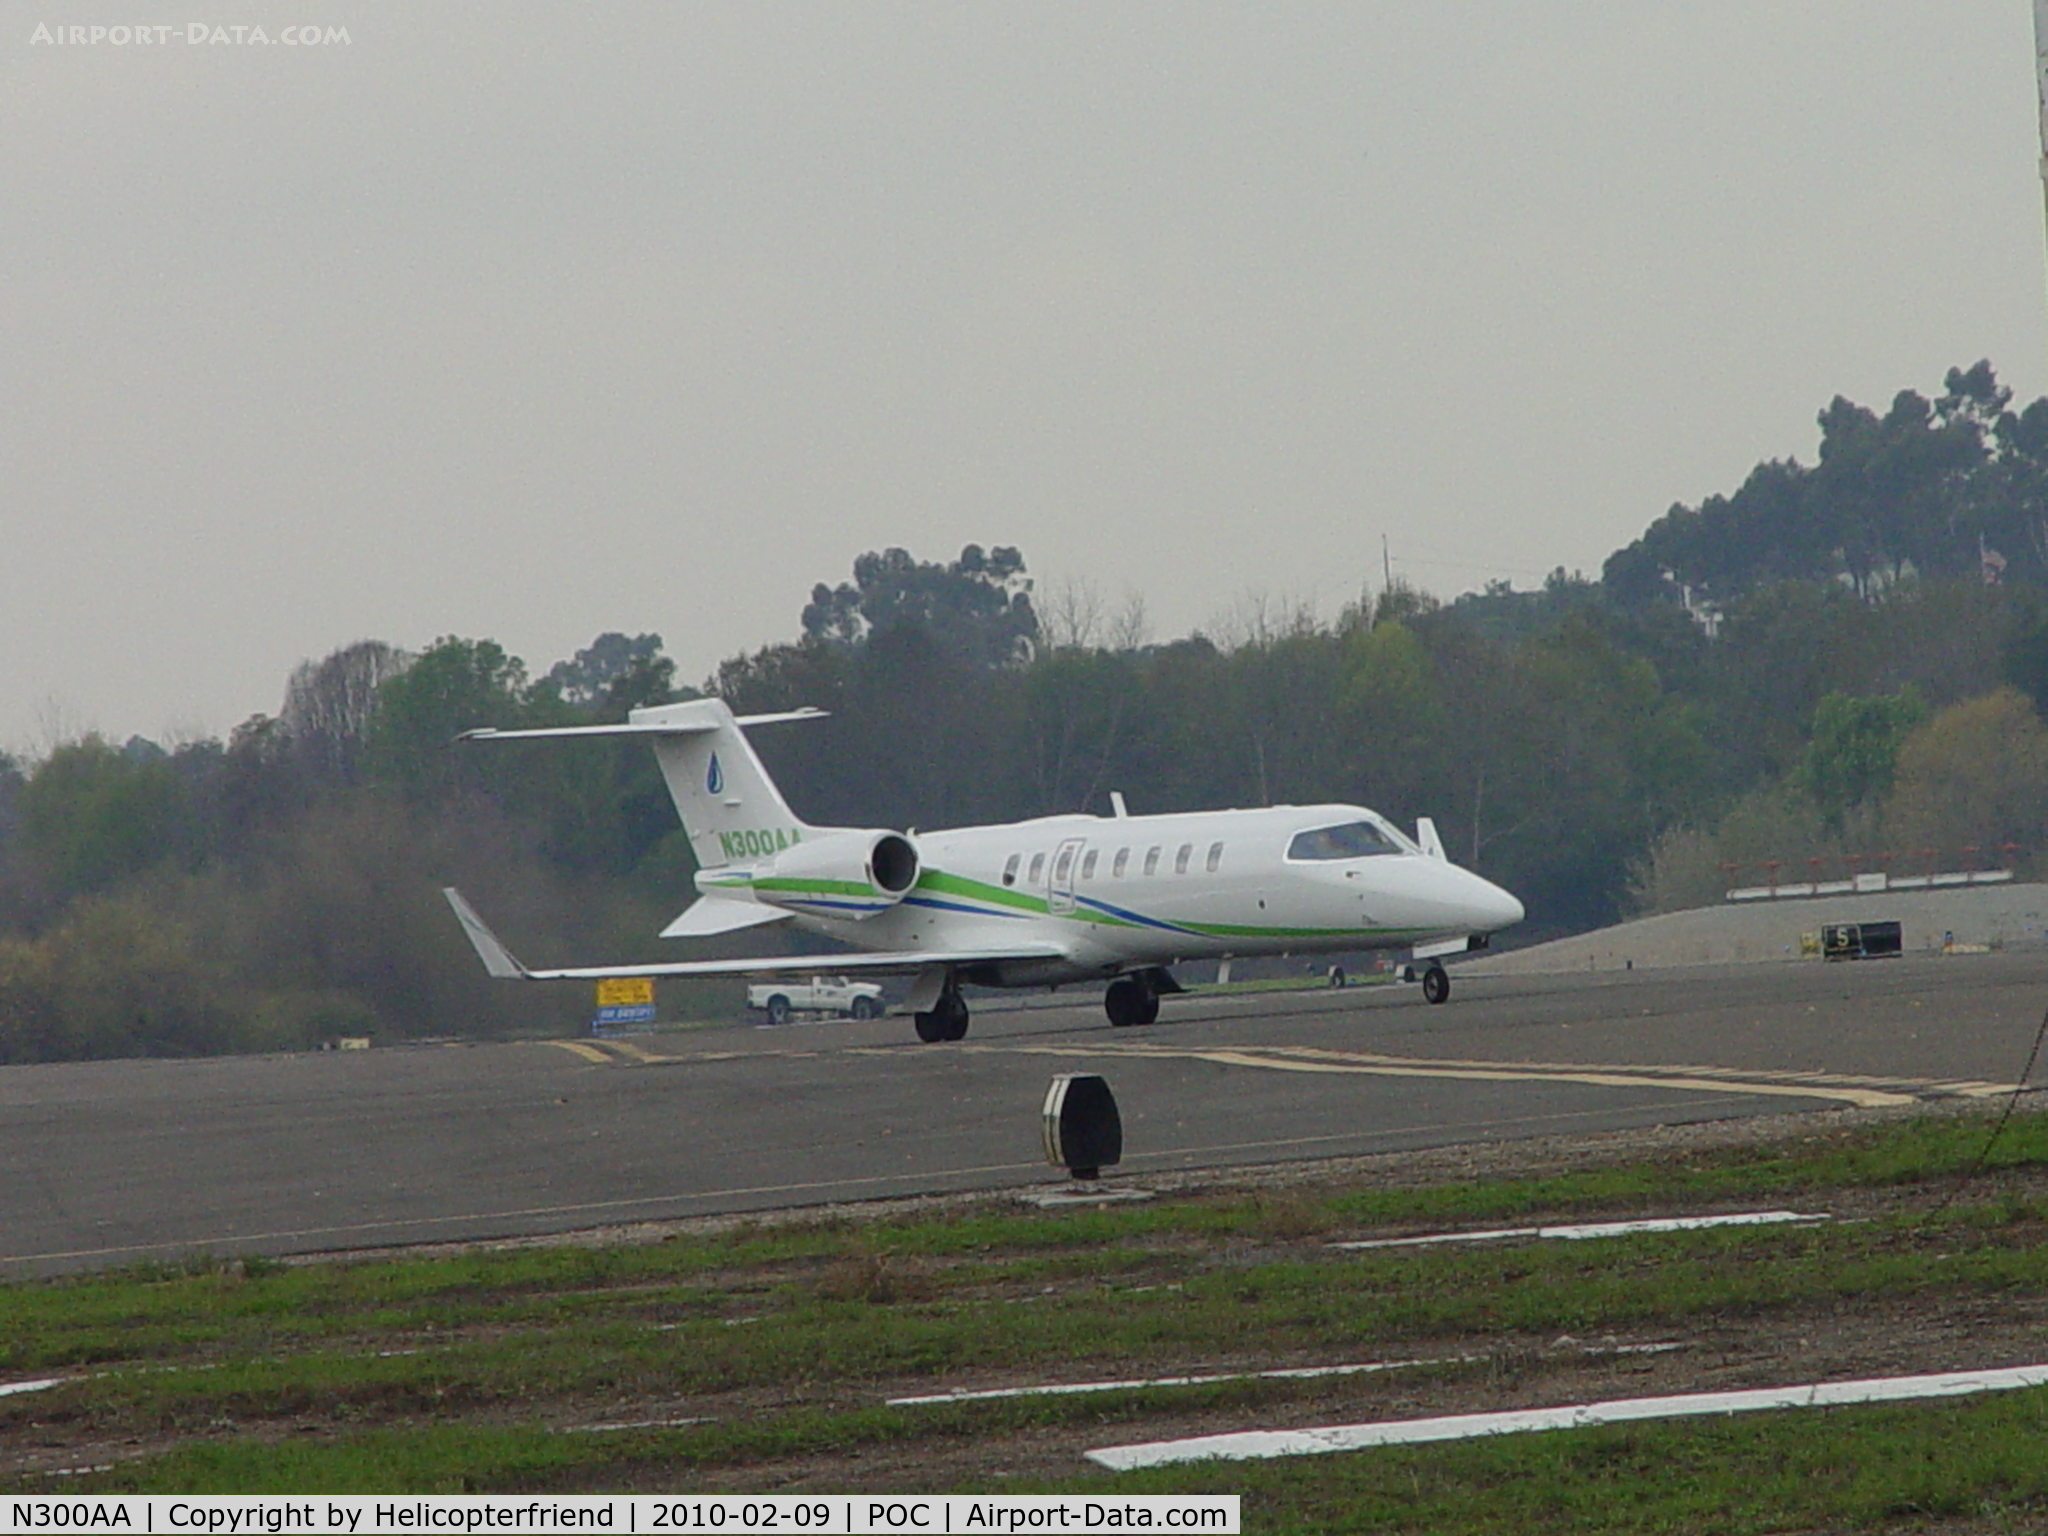 N300AA, 2005 Learjet 45 C/N 45-285, Entering taxiway headed to runway 26L